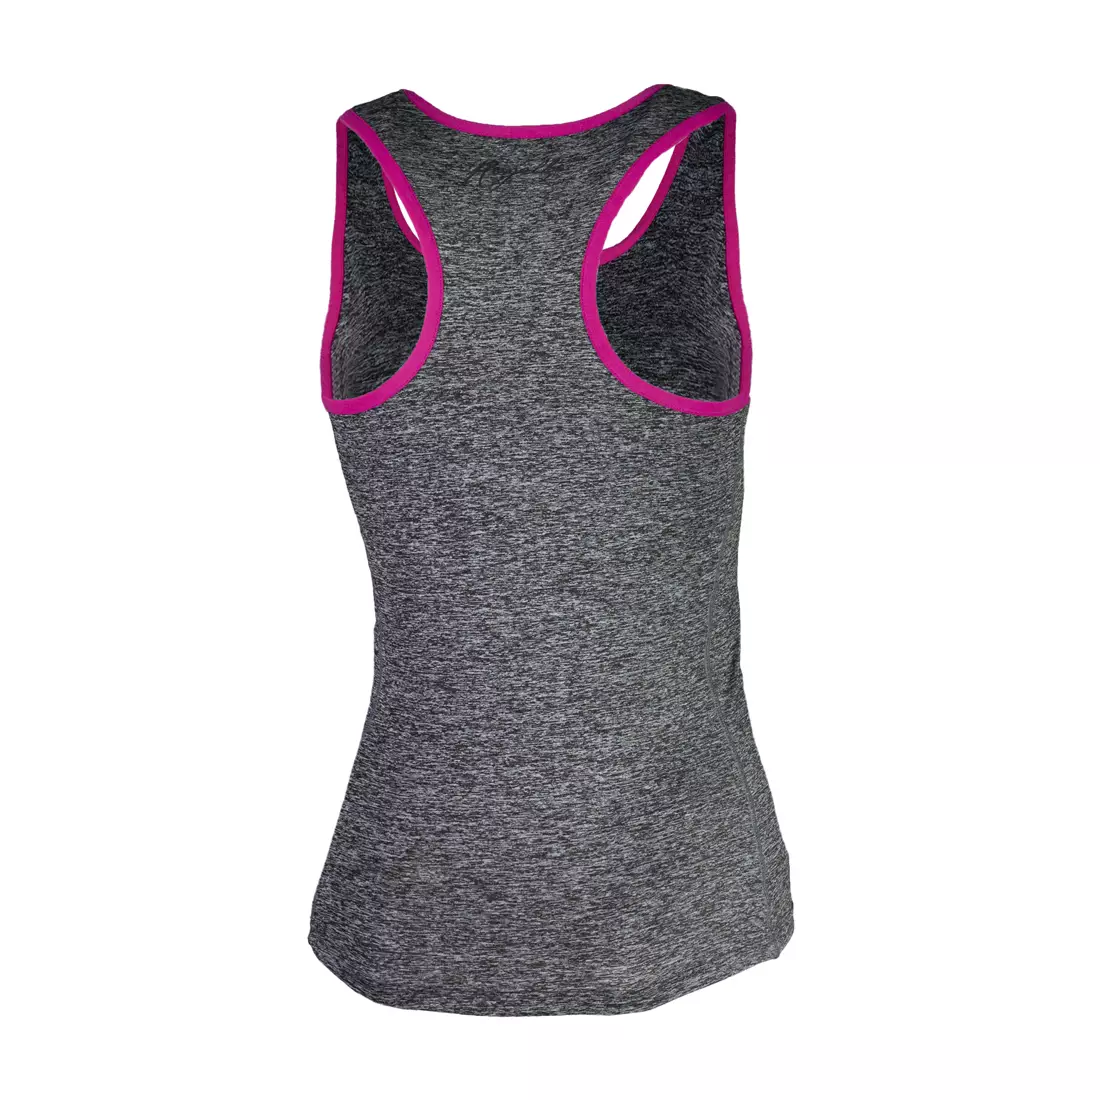 ROGELLI RUN SALIMA 840.263 Damen Lauf-T-Shirt/Top, Farbe: grau-rosa